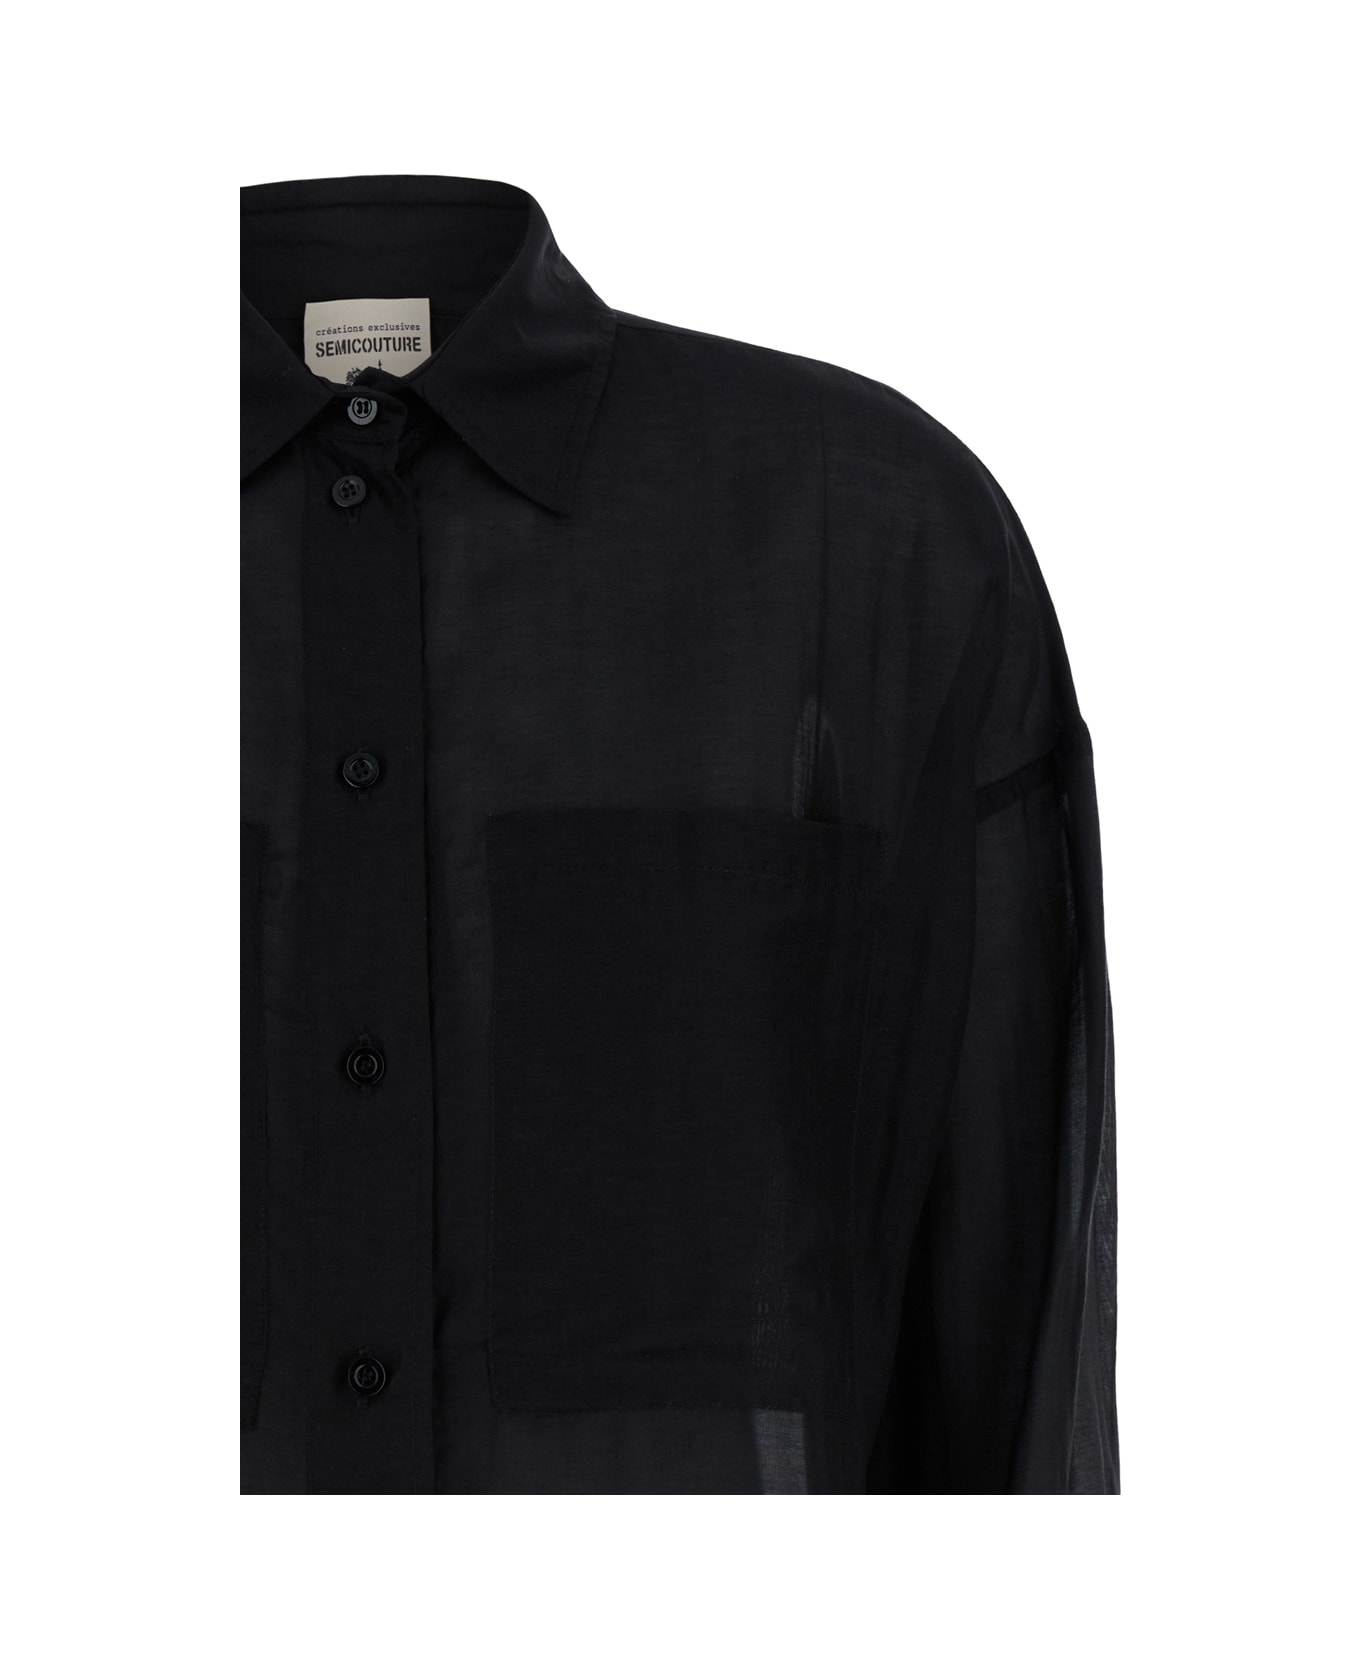 SEMICOUTURE Black Semi-sheer Shirt In Silk Blend Woman - Black